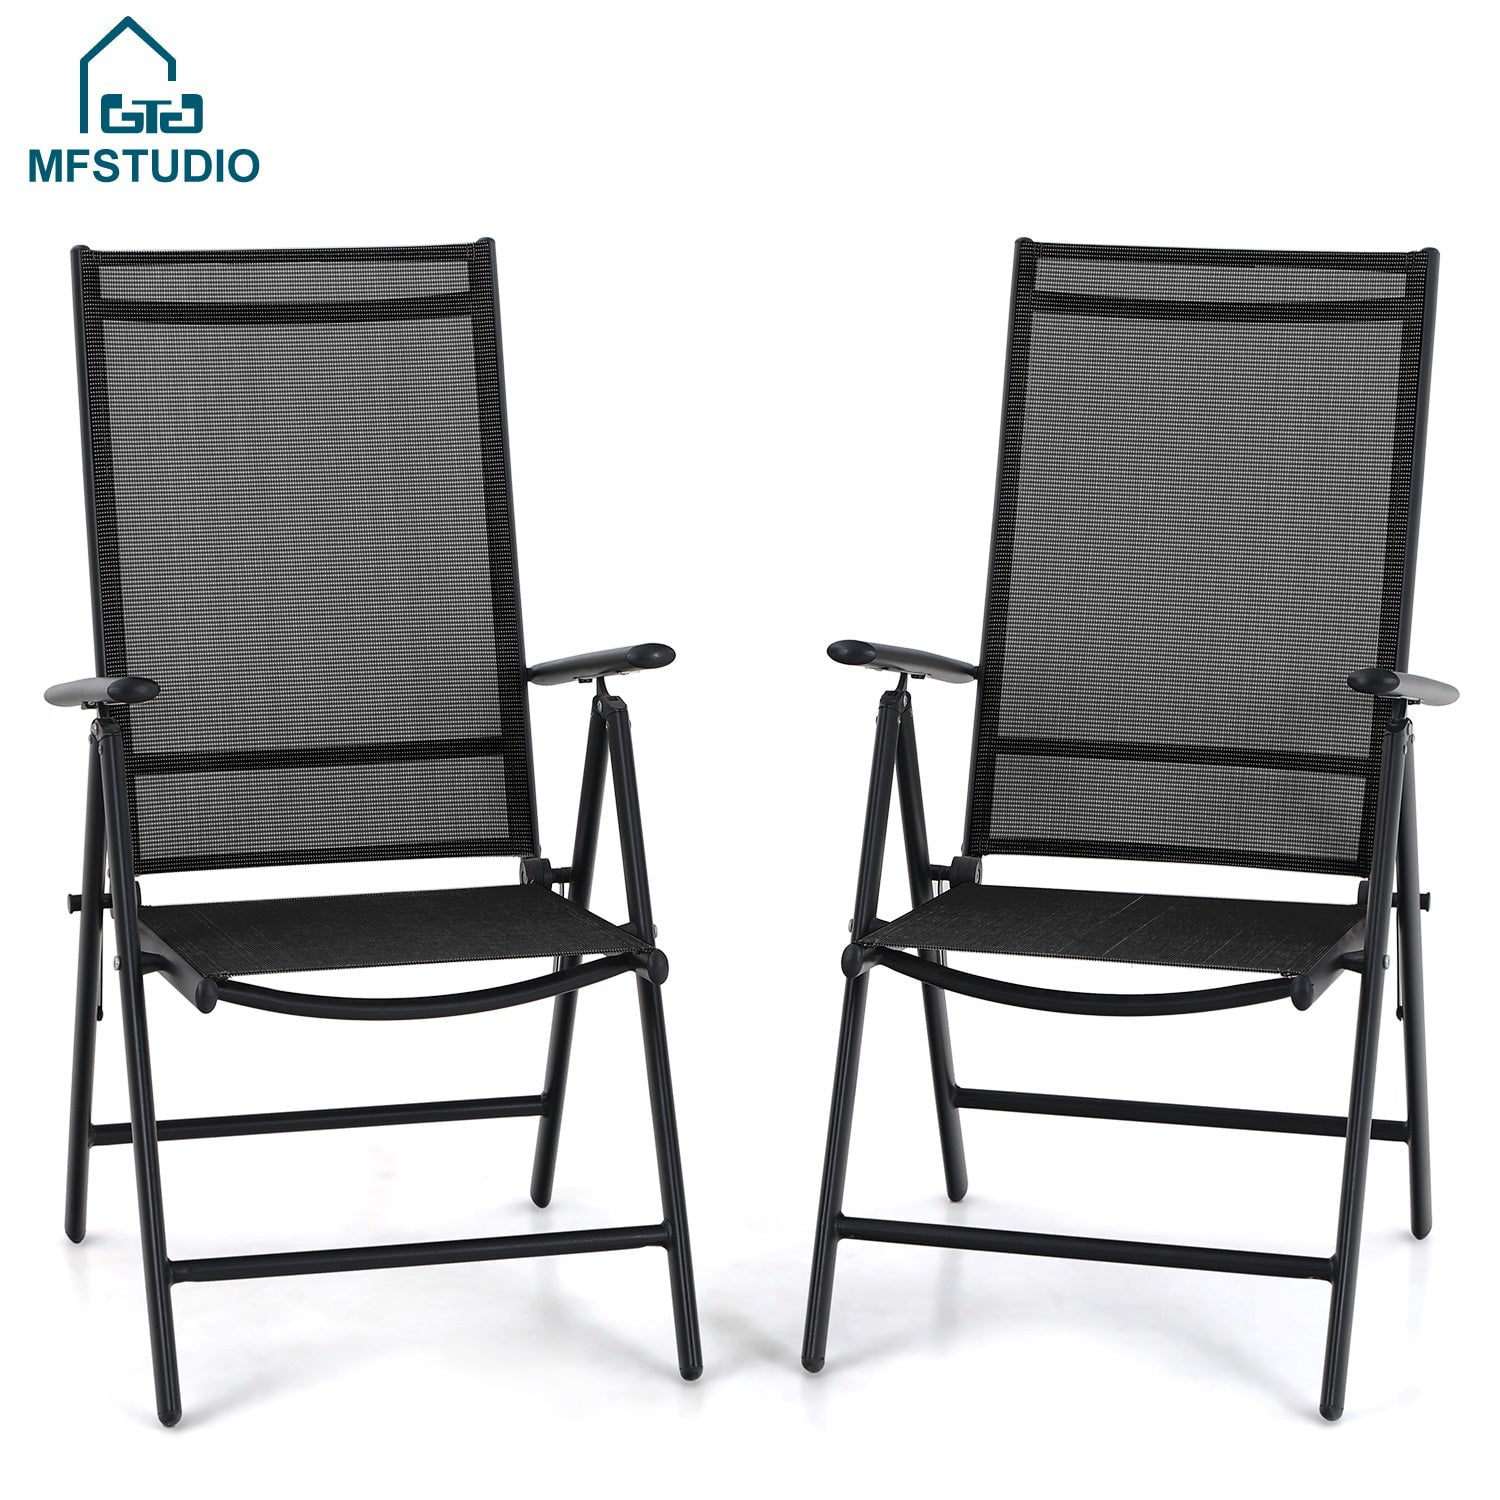 Set 4 Aluminium folding garden chairs outdoor camping patio furniture silver new 